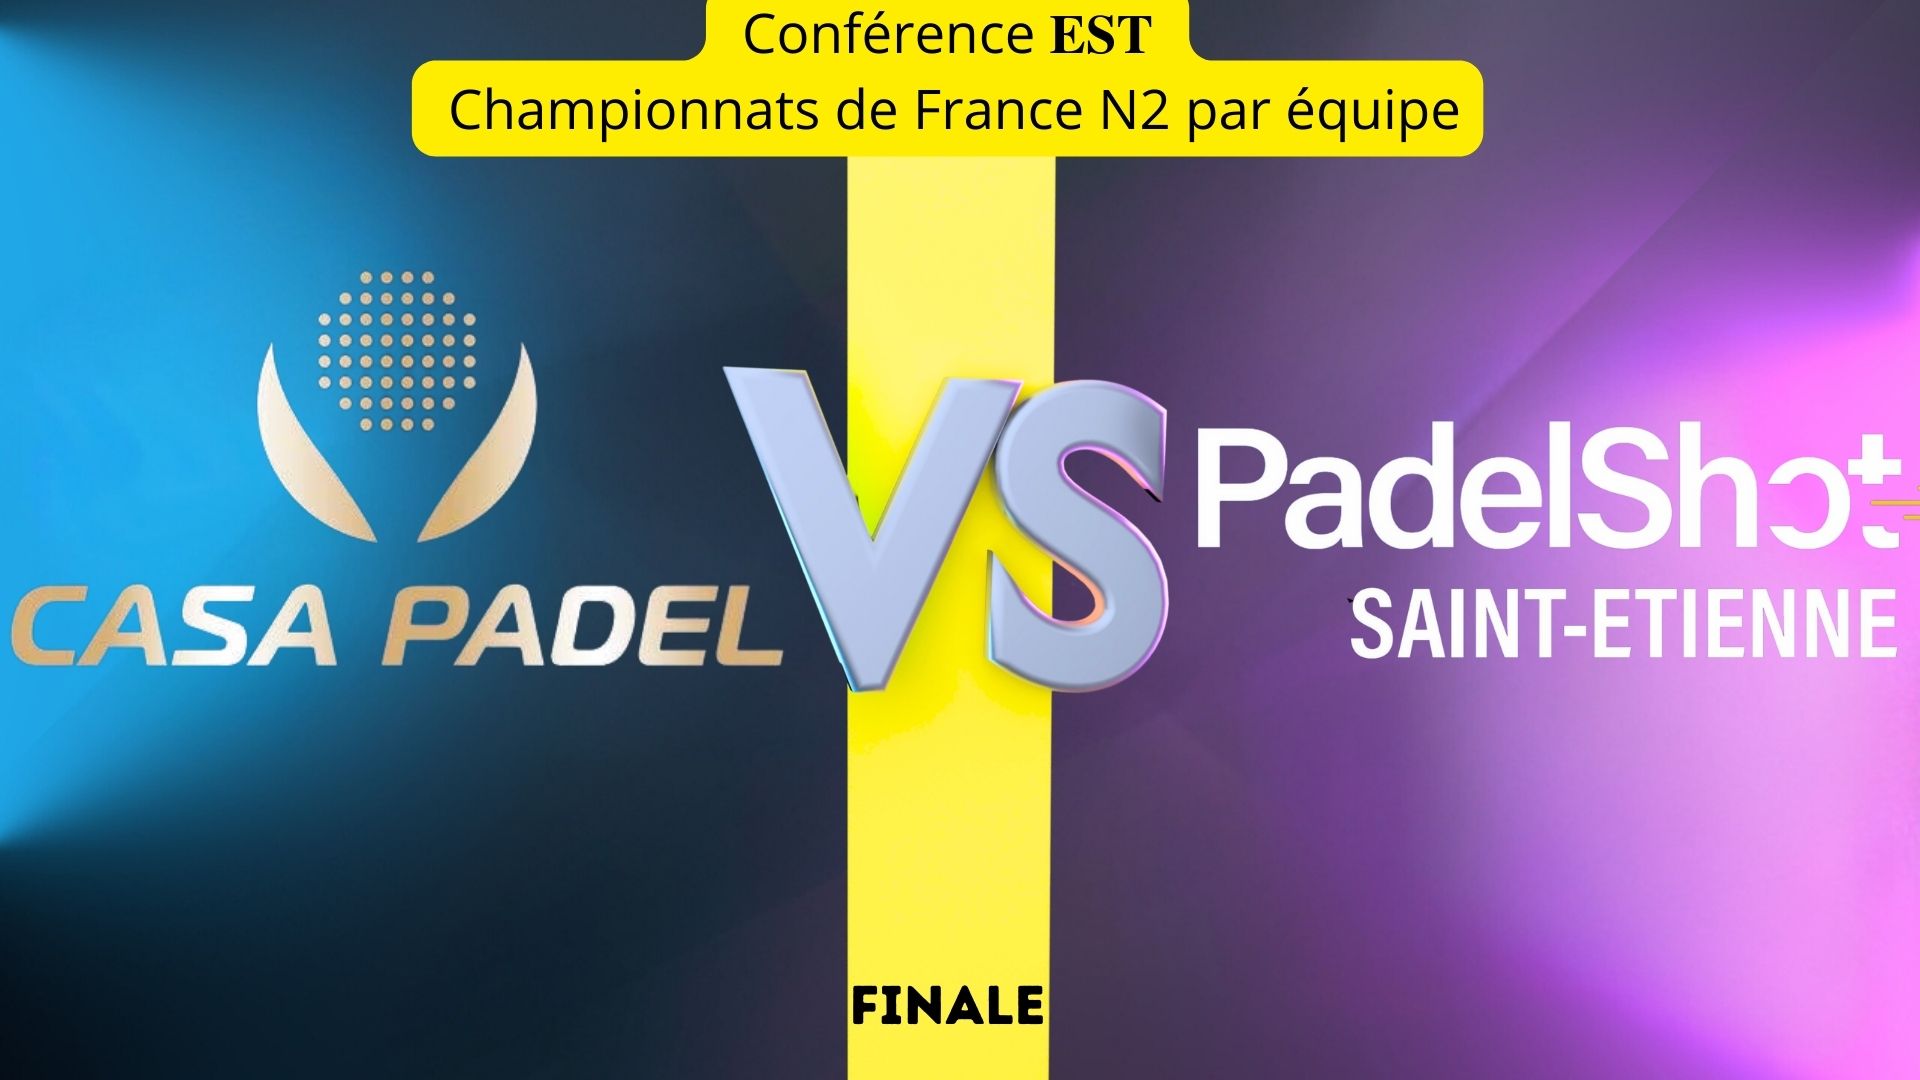 Final Este: Casa Padel vs PadelDisparo Saint-Etienne